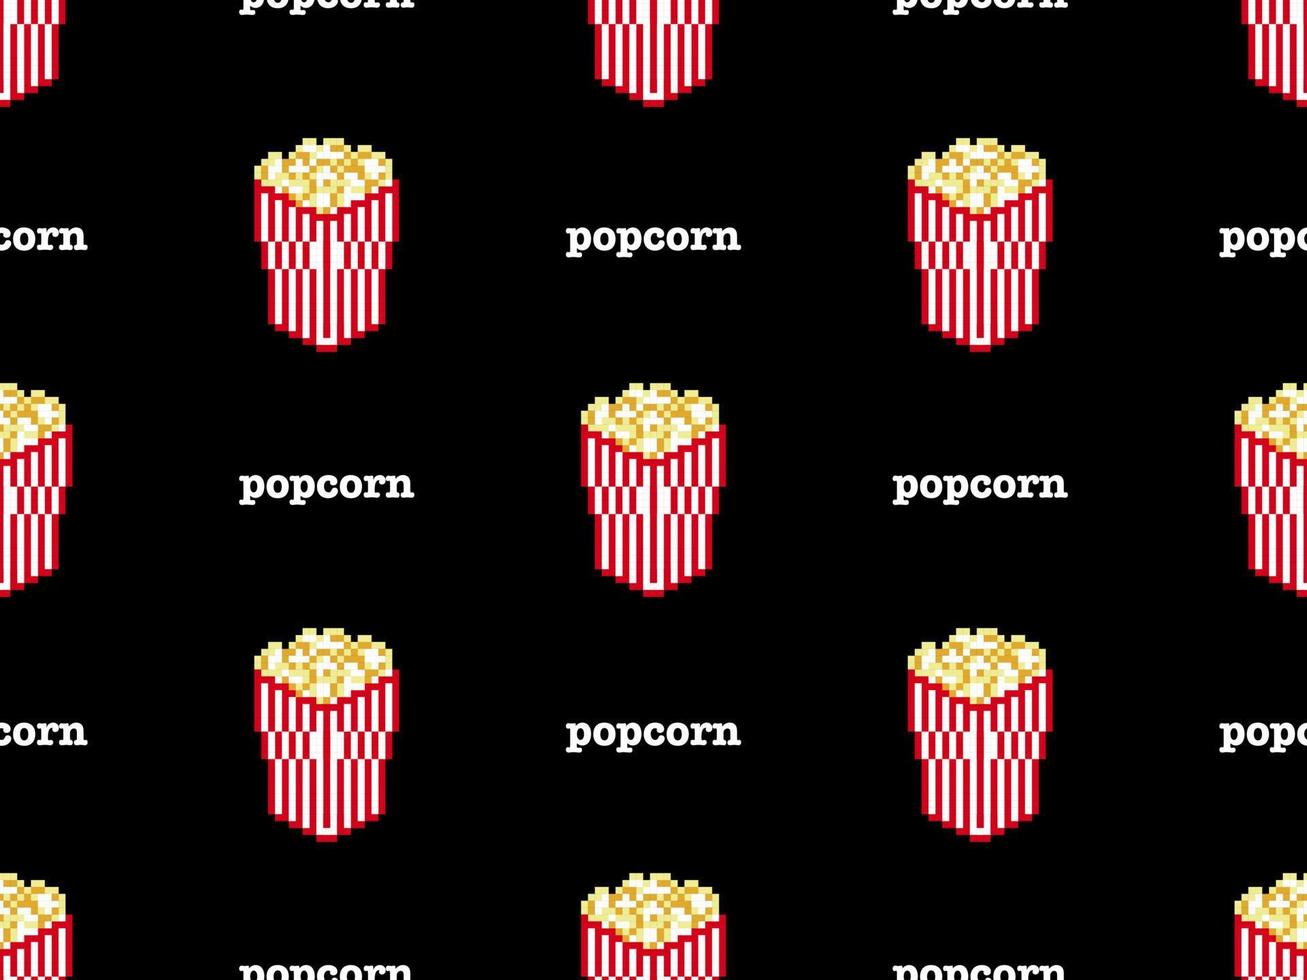 popcorn seriefigur seamless mönster på svart bakgrund. pixel stil vektor